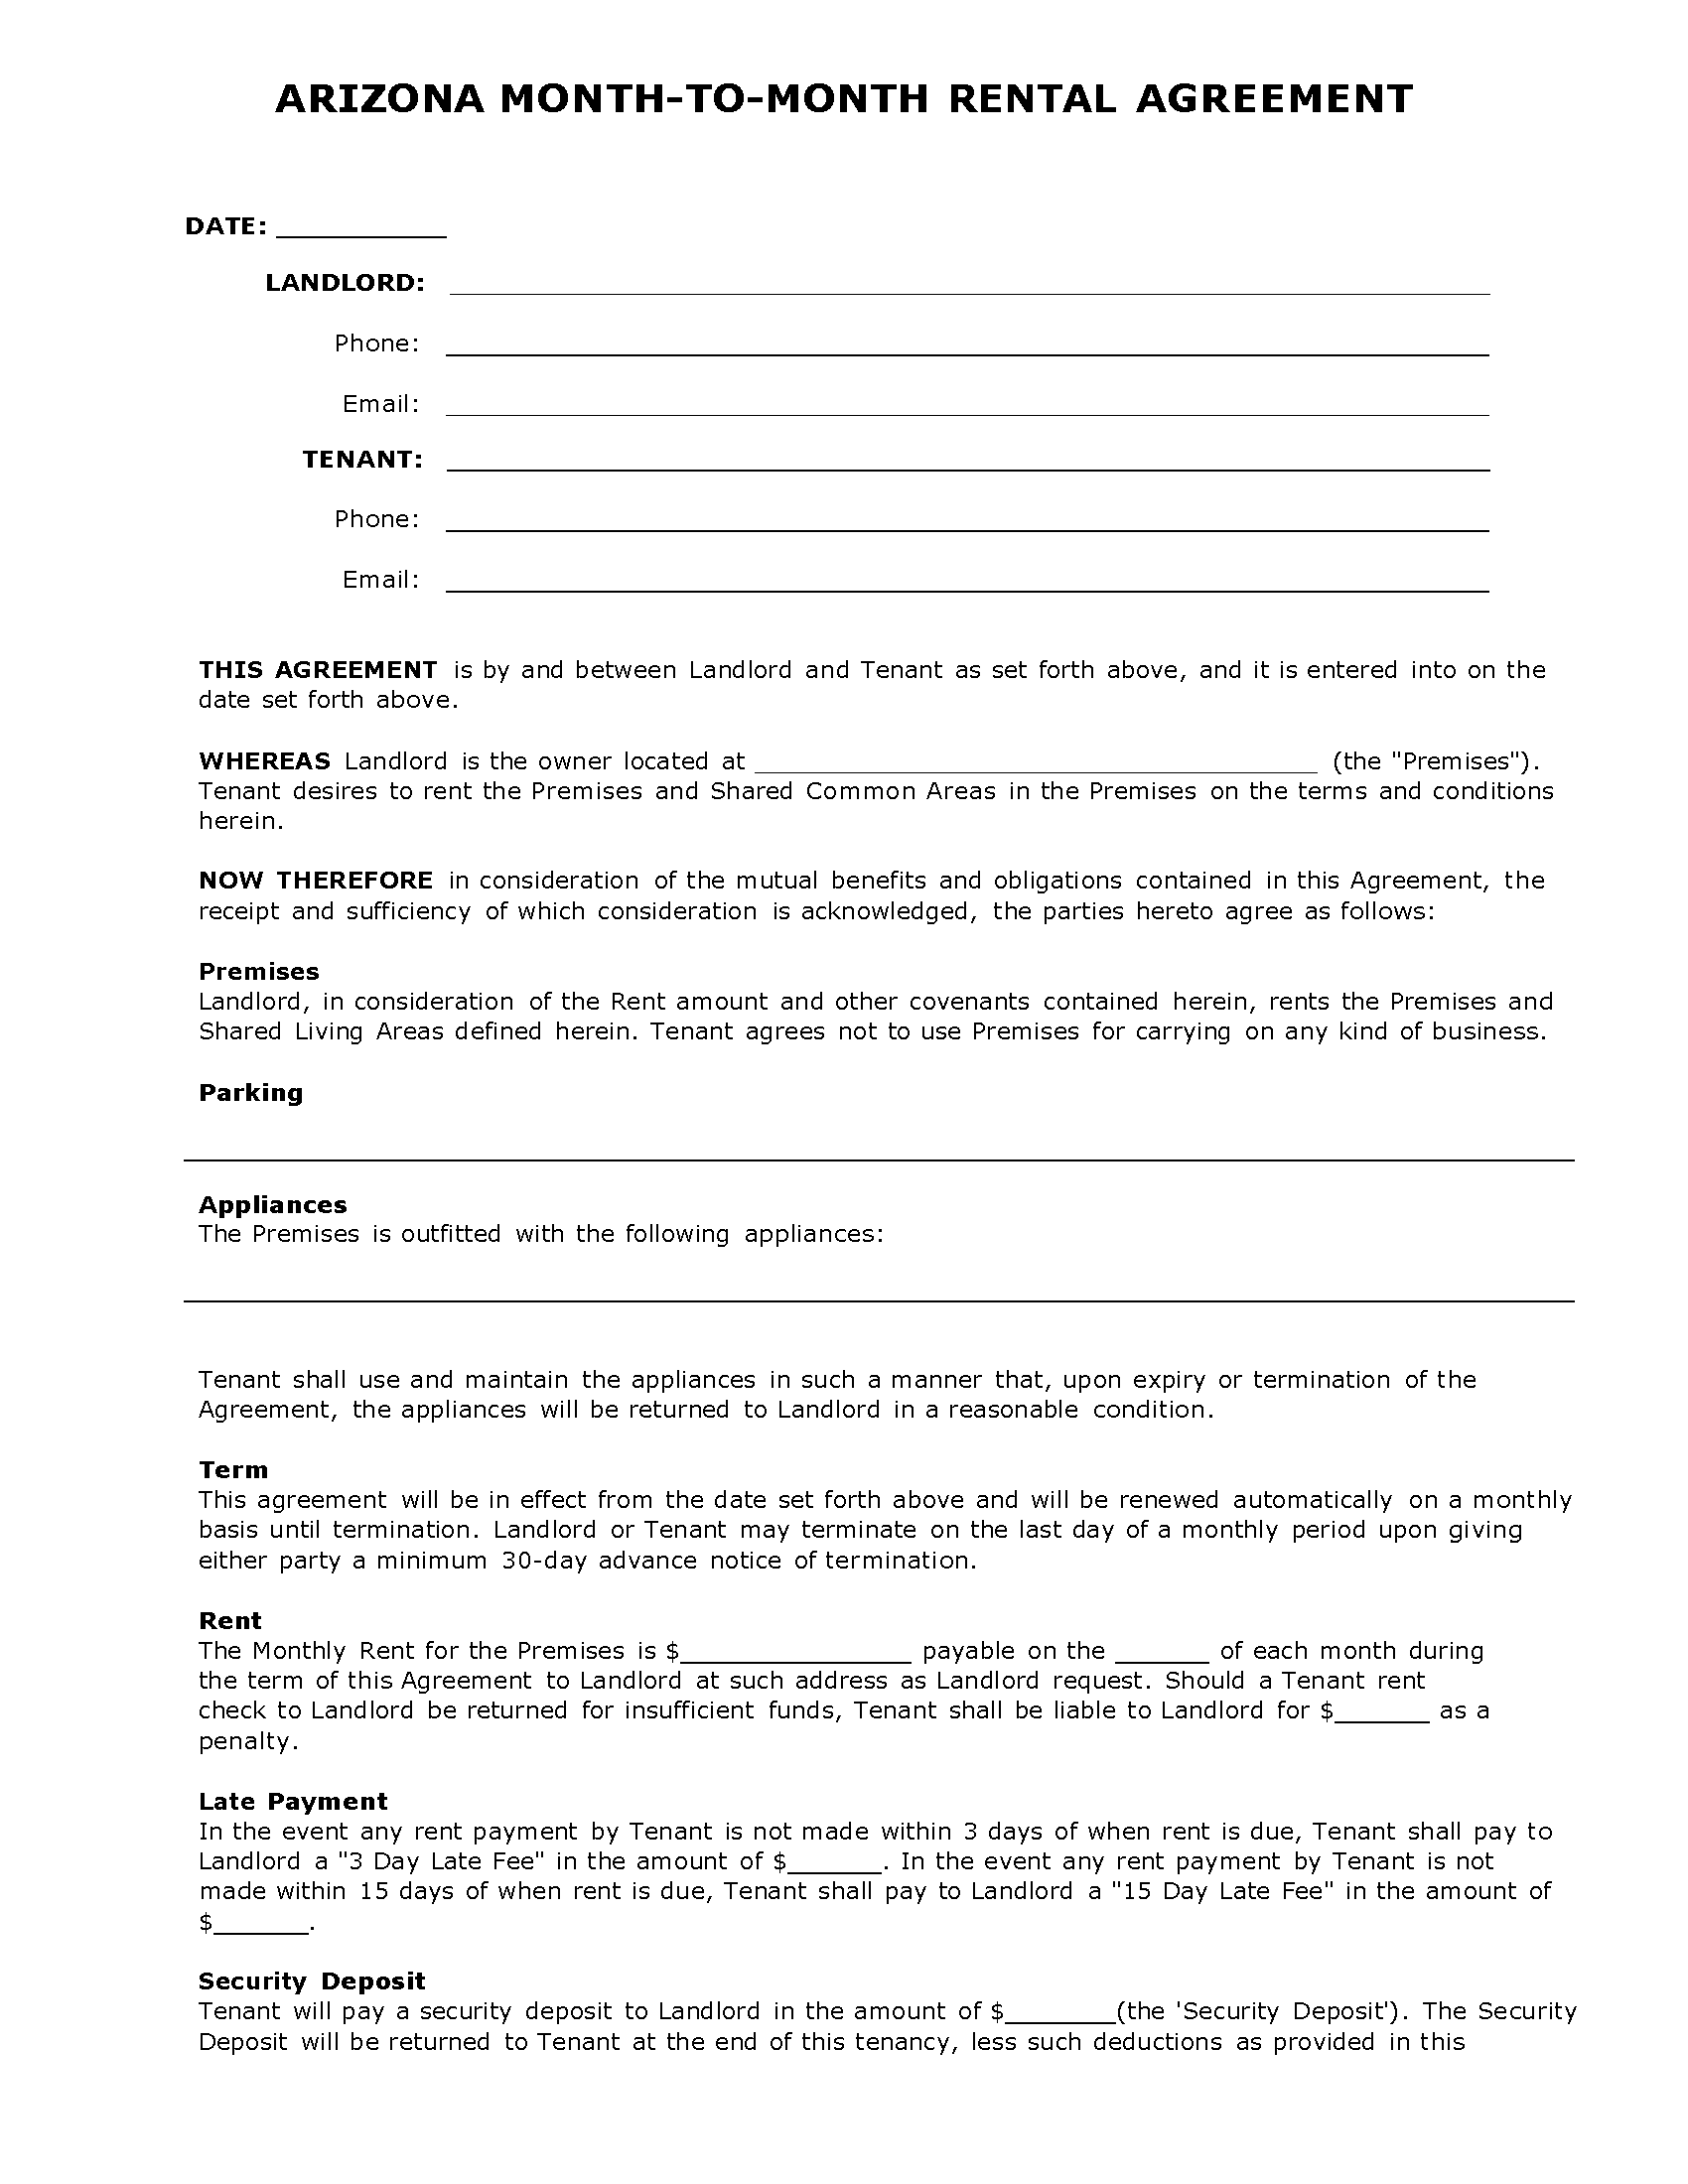 printable-lease-agreement-form-arizona-printable-forms-free-online